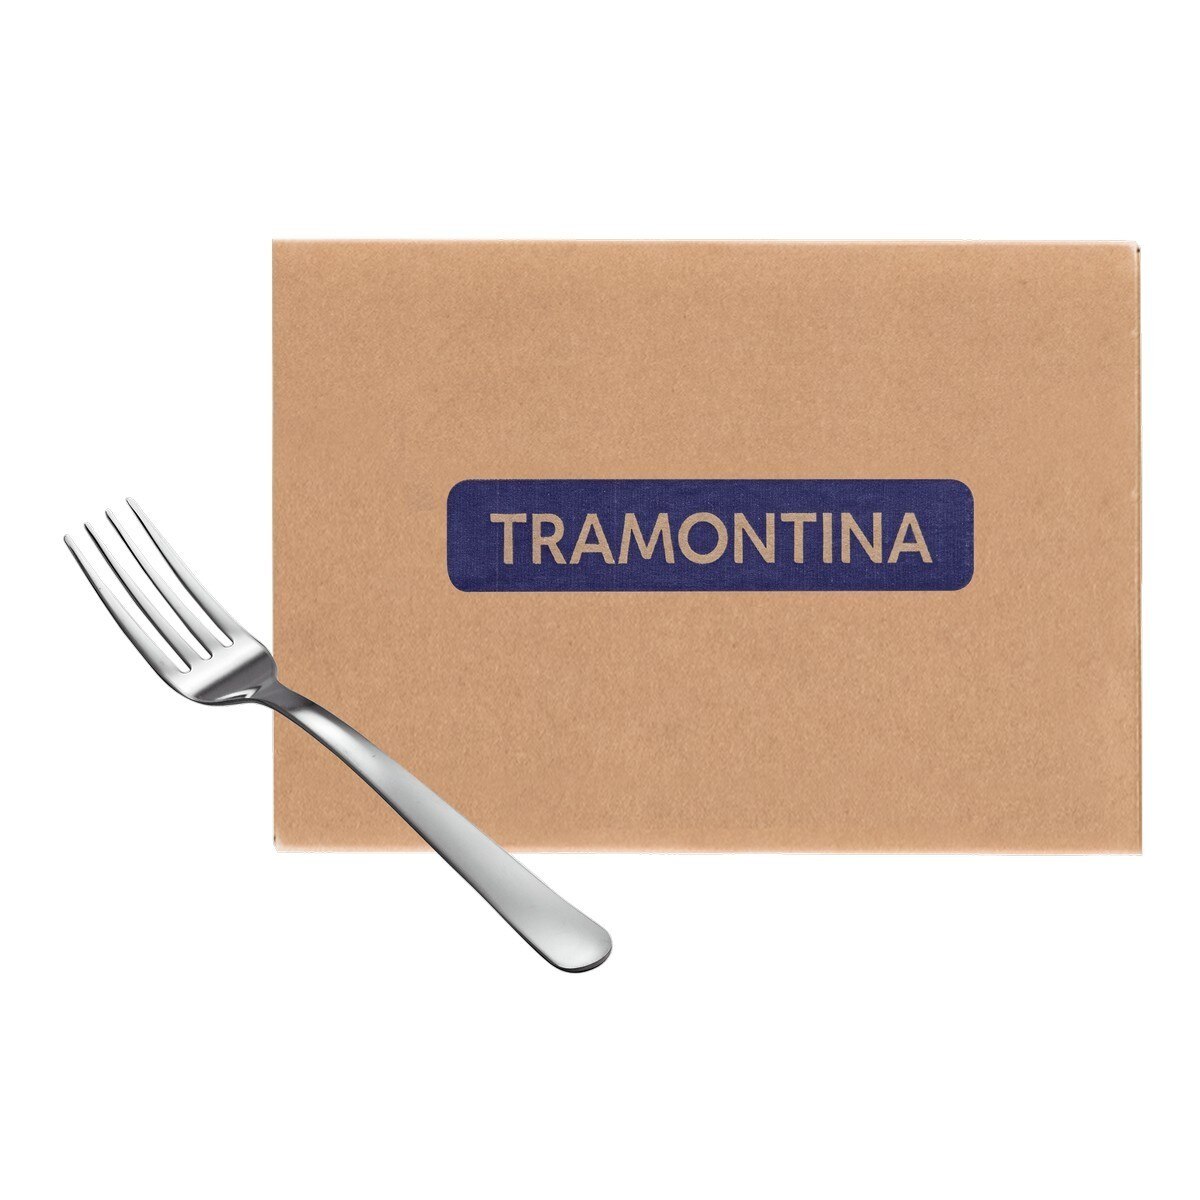 Tramontina 不鏽鋼餐叉 600件組